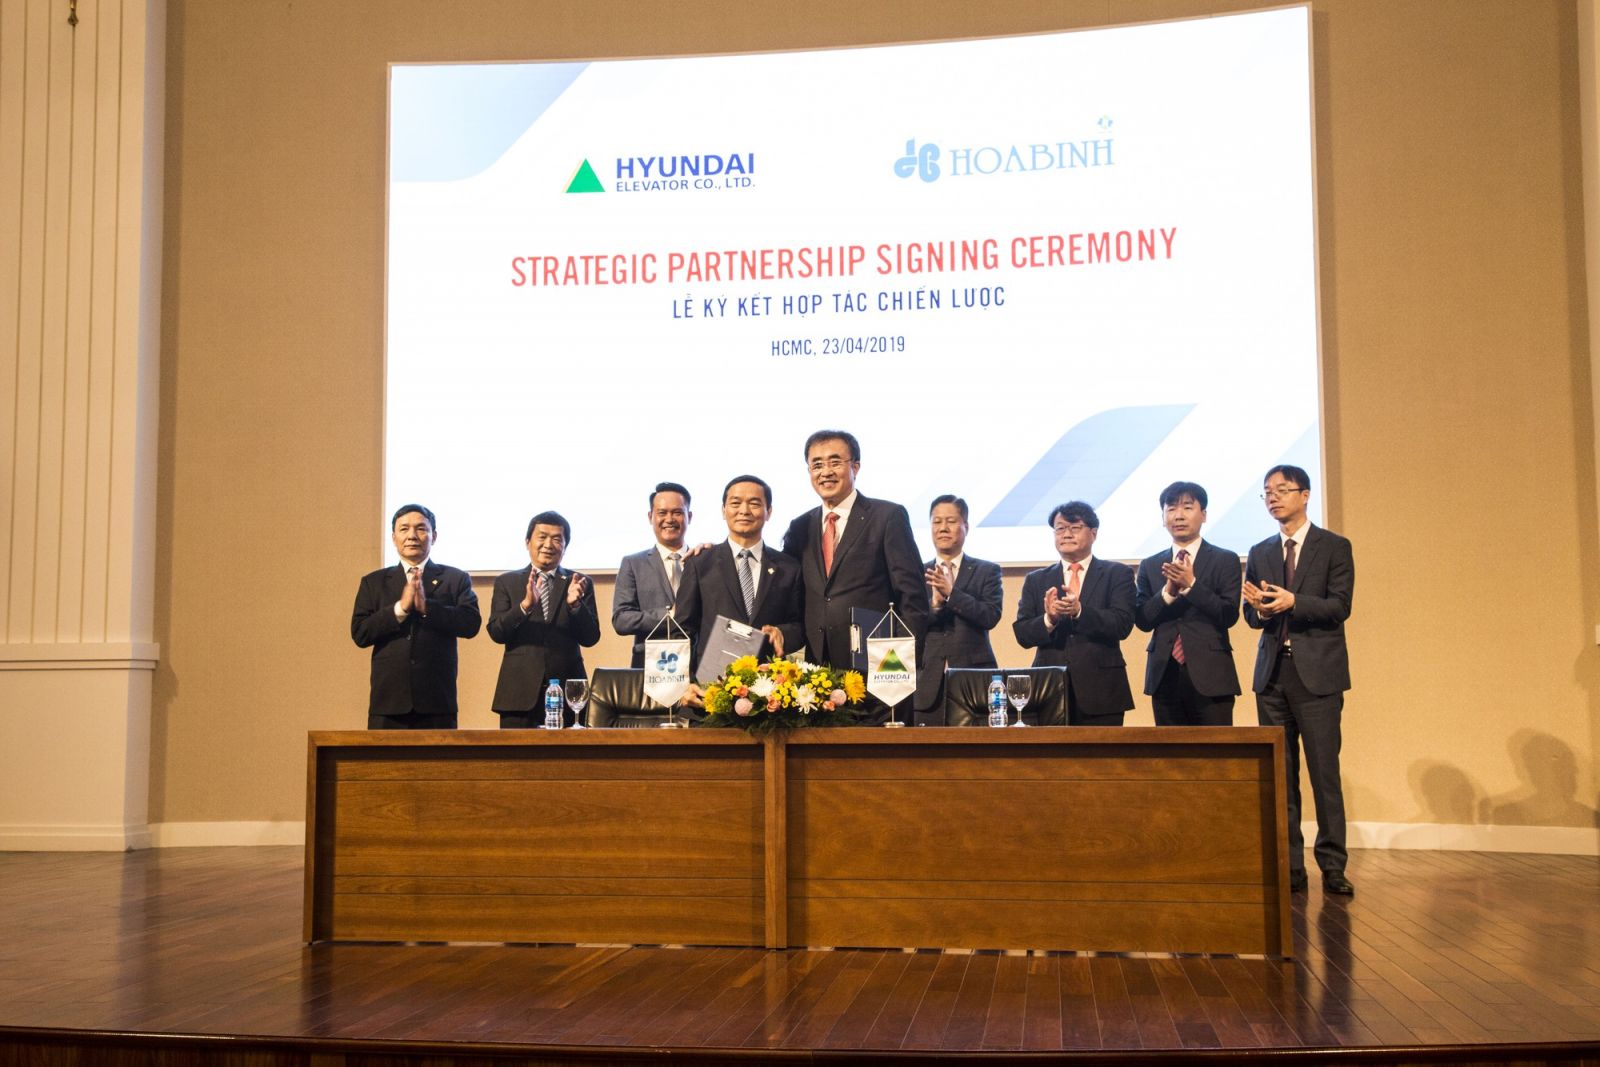 Hoa Binh and Hyundai Elevator signing ceremony.